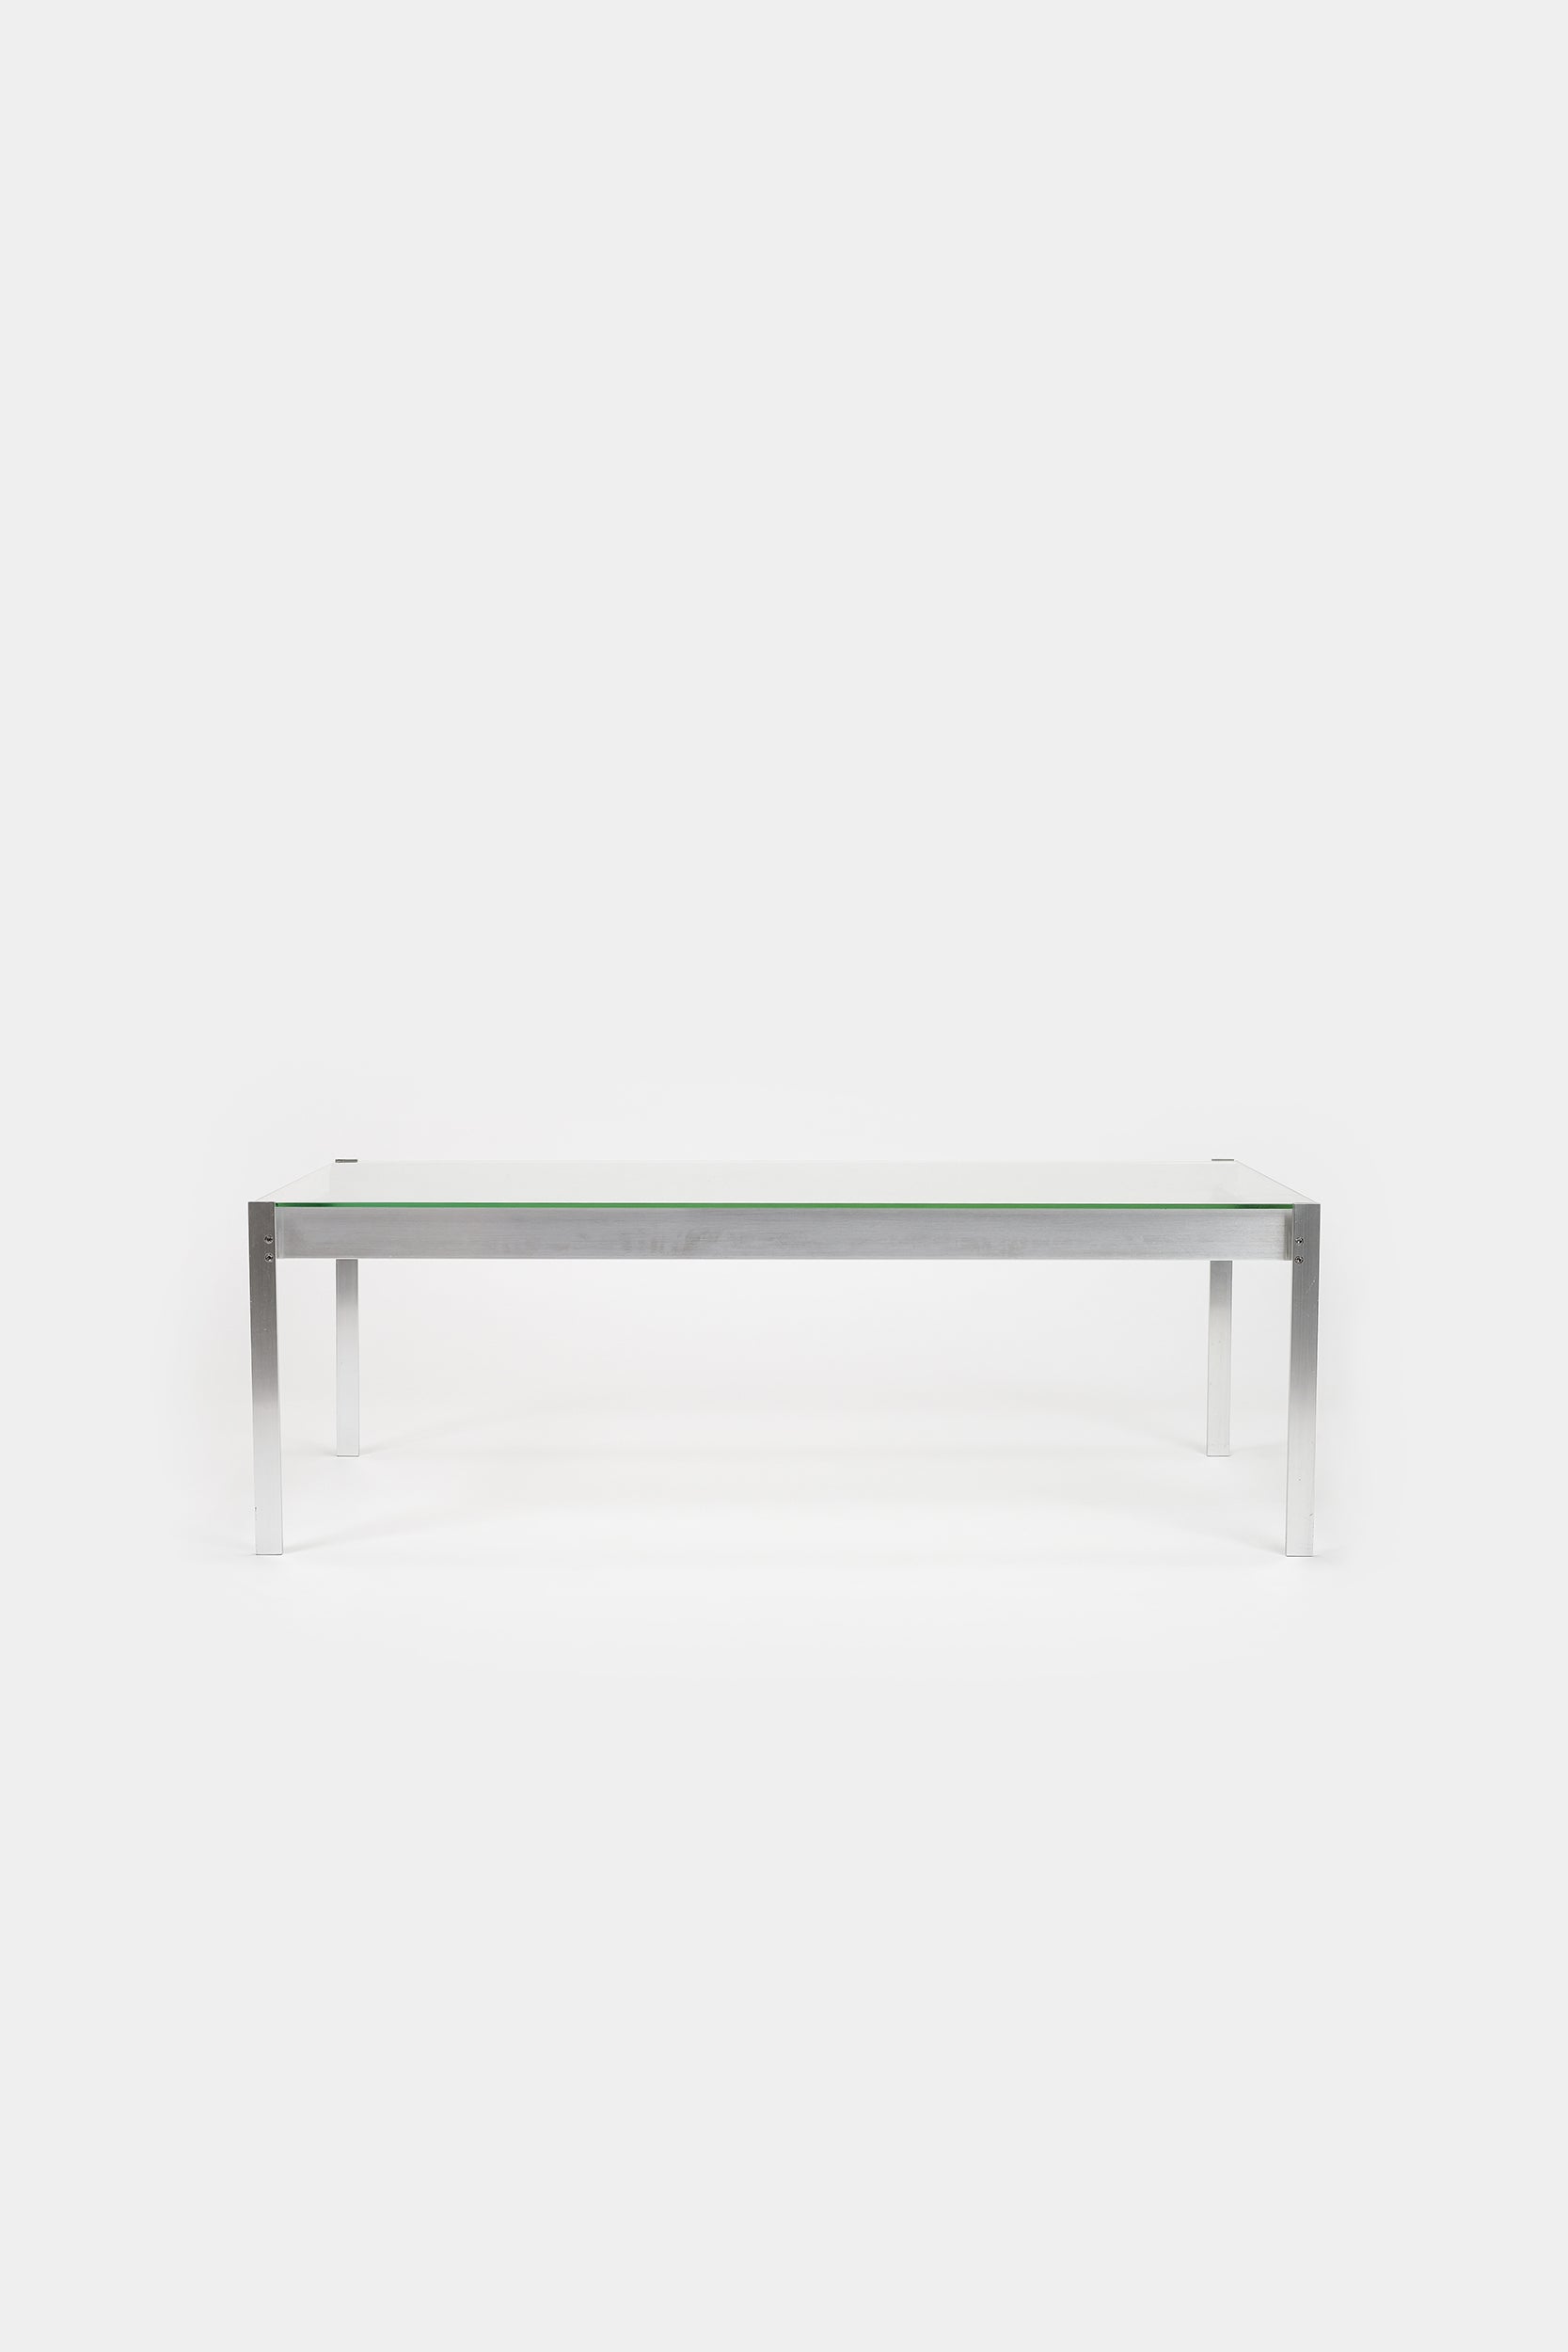 Glass Table with Aluminium Frame, Switzerland, 60s